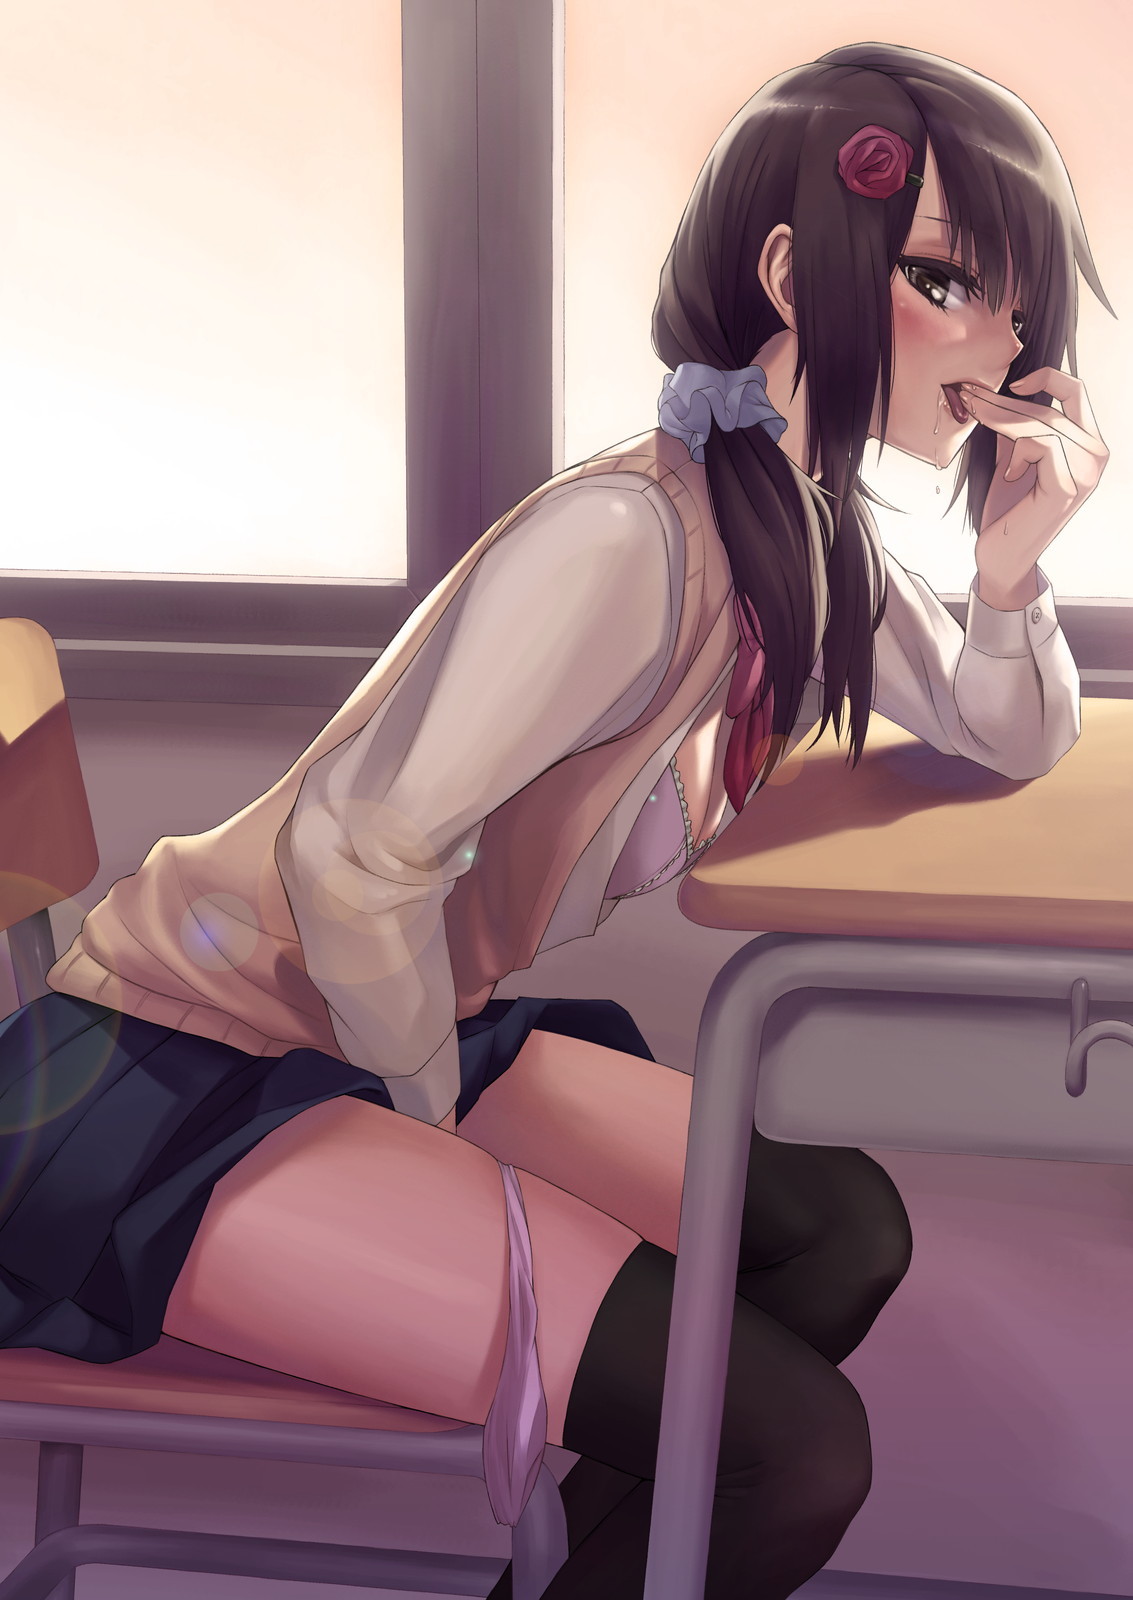 ecchiftw2:  Girl masturbating in class ♥